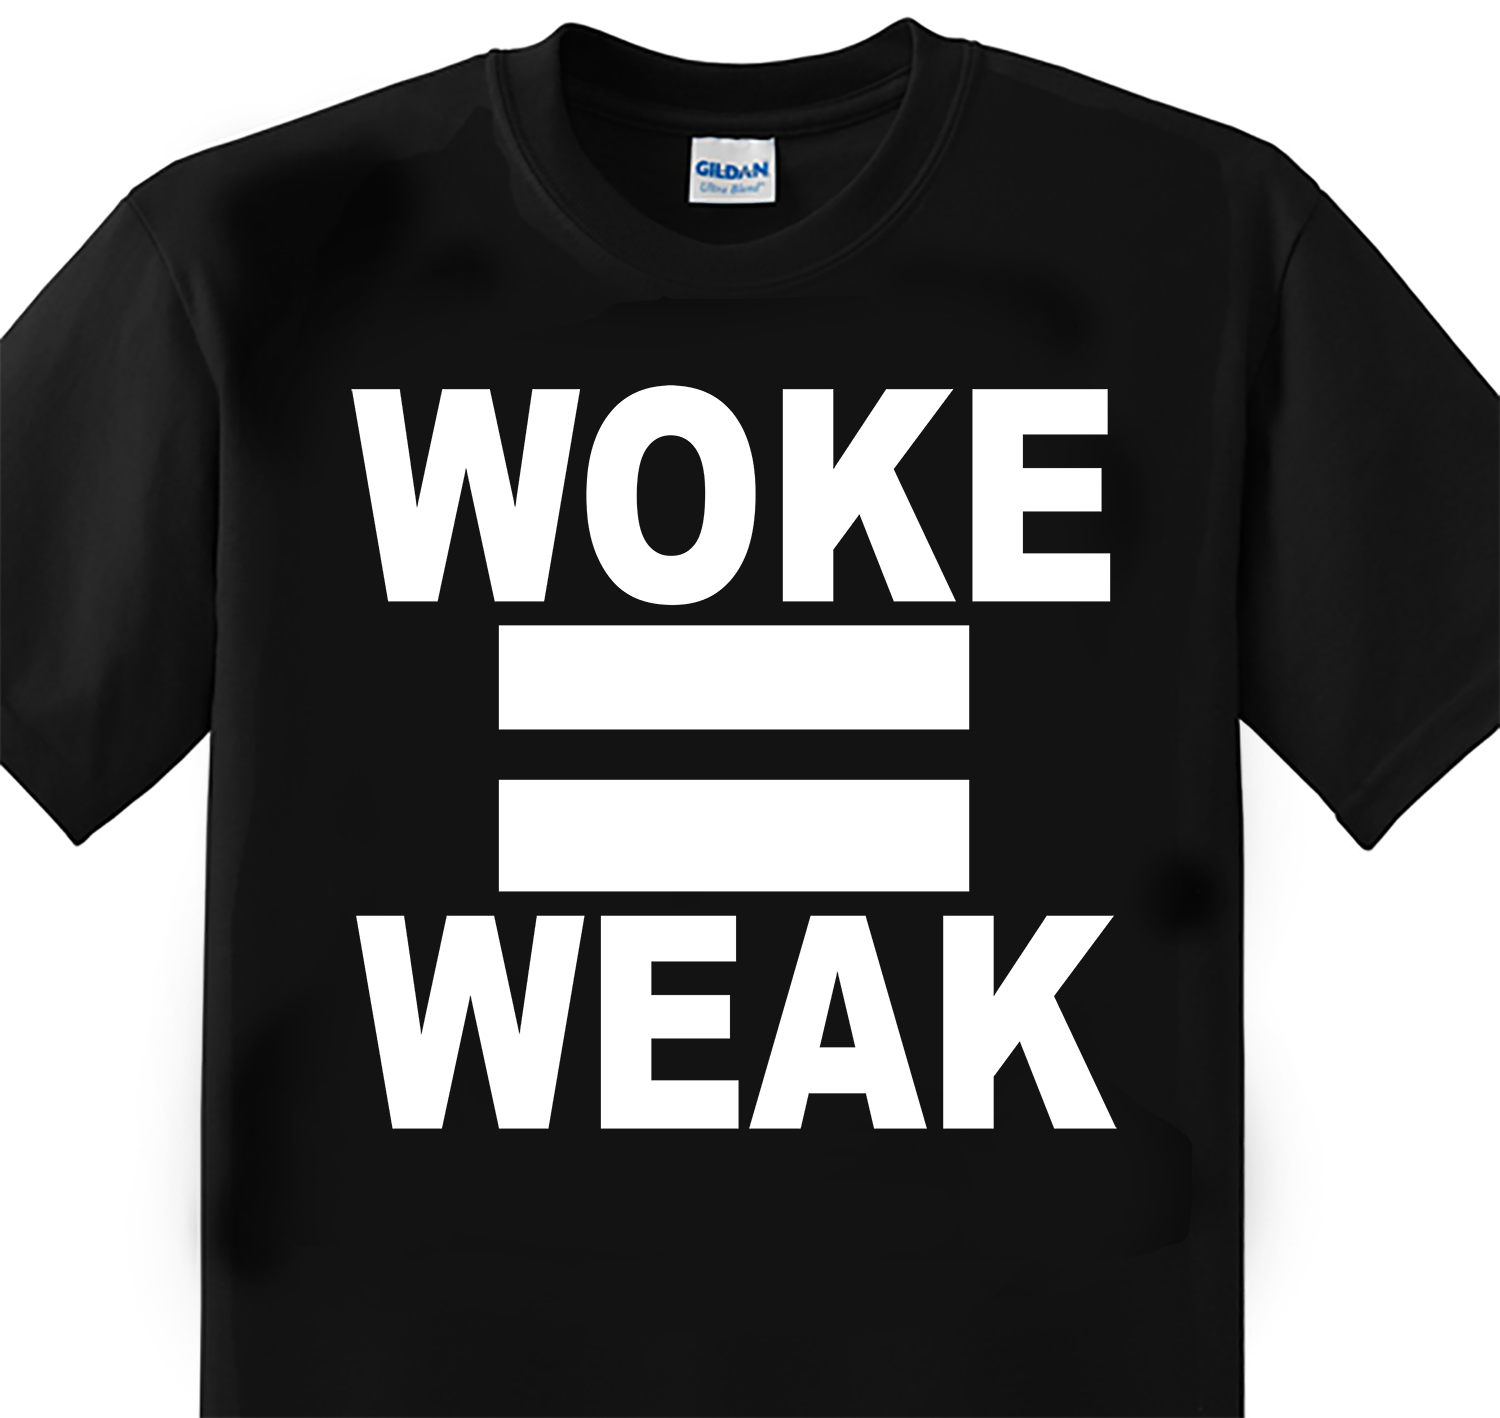 WOKE = WEAK - Current Events Political Commentary T-Shirt